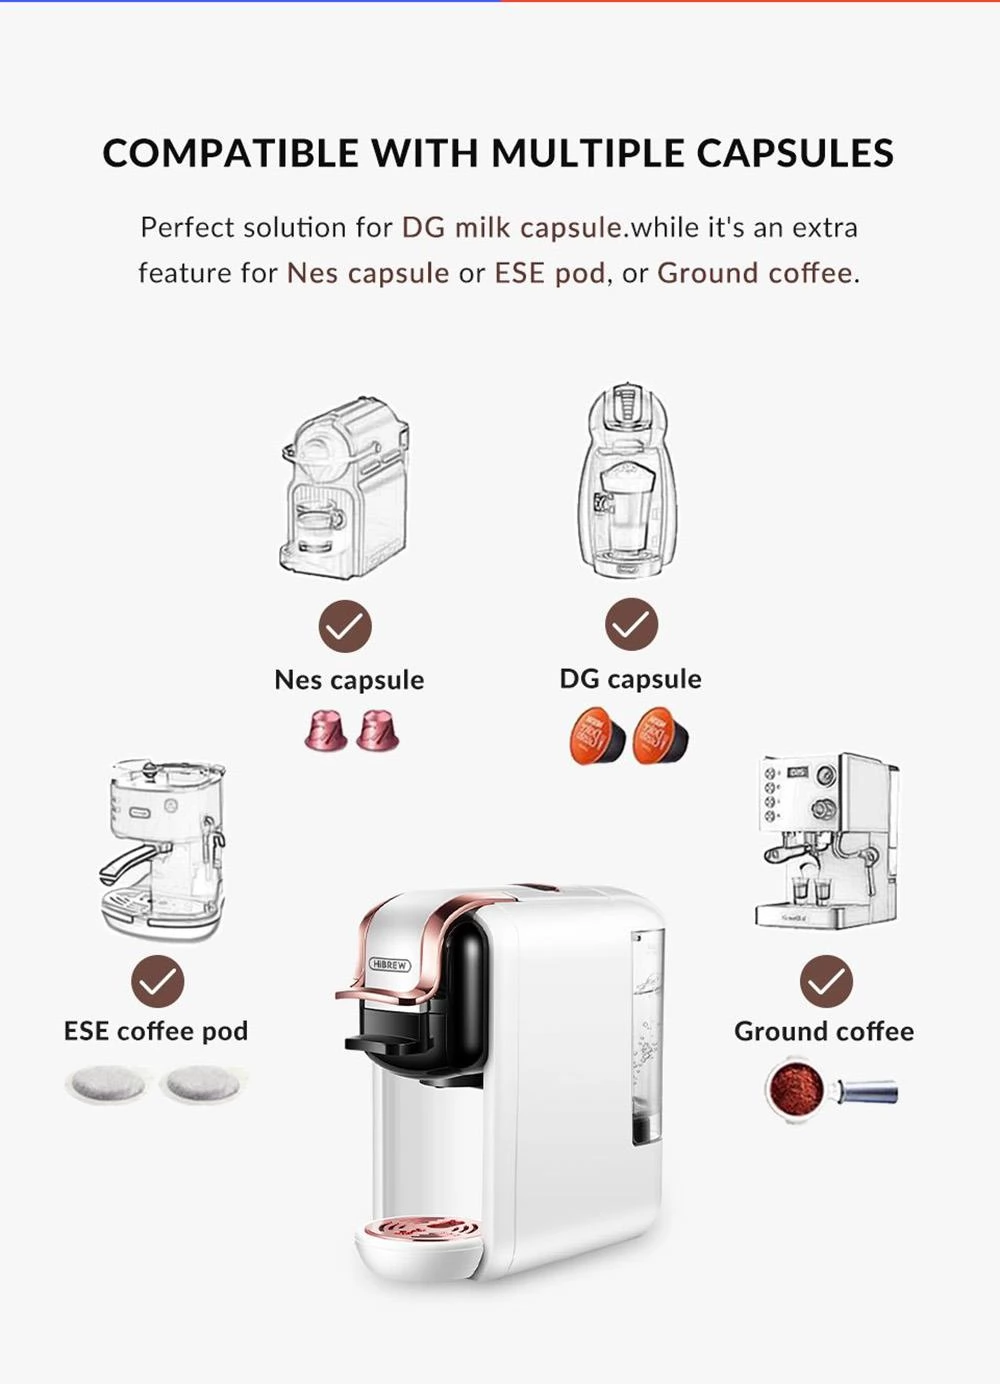 HiBREW H2A 4-in-1 meervoudige capsule-koffiezetapparaat 1450W warm/koud, 19 bar extractie, 2 kopjes grootte opties